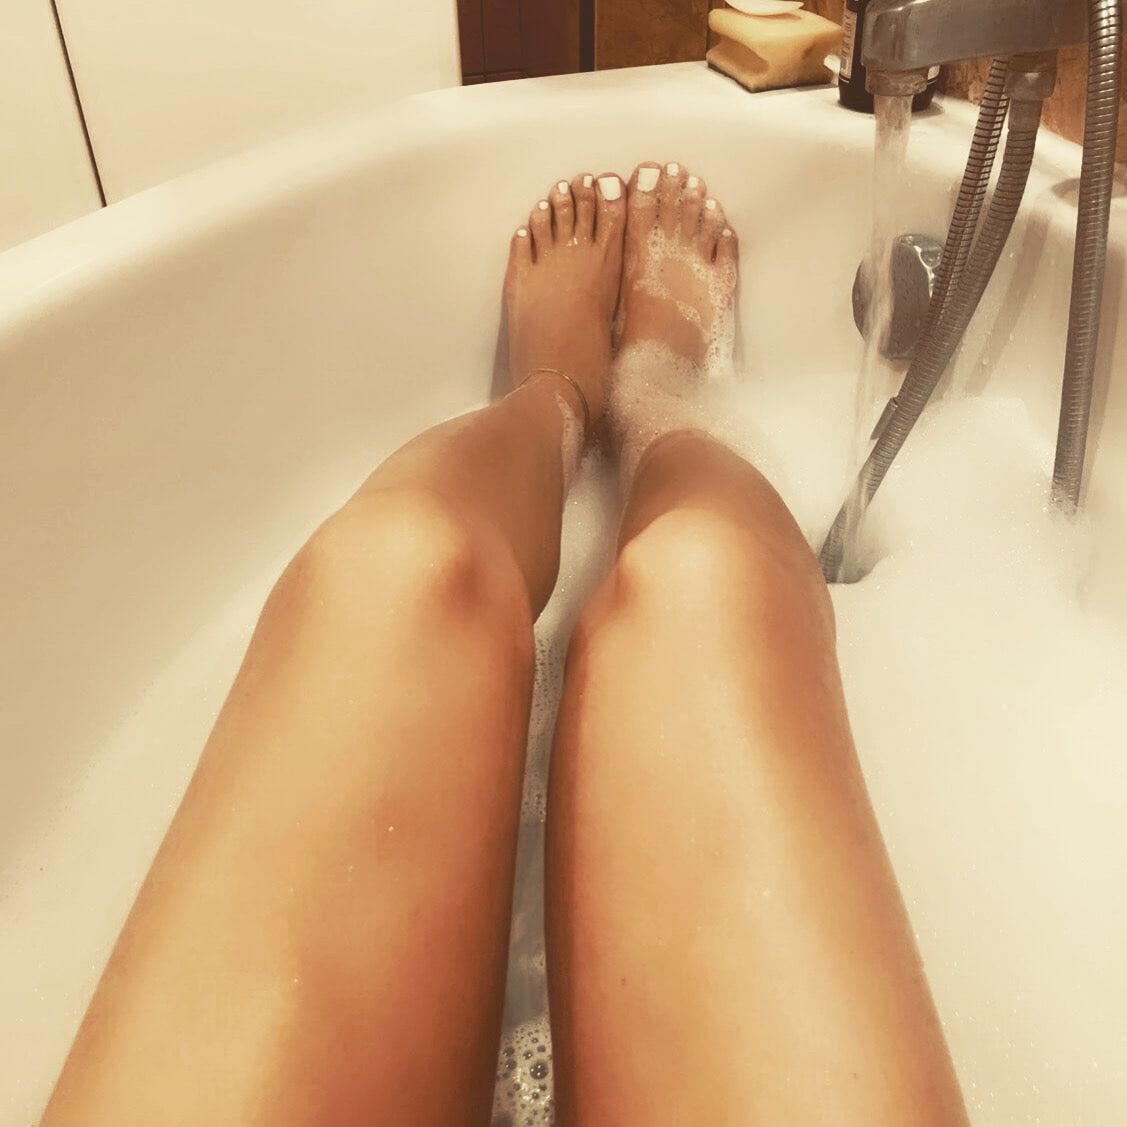 Sexy tanned legs & feet